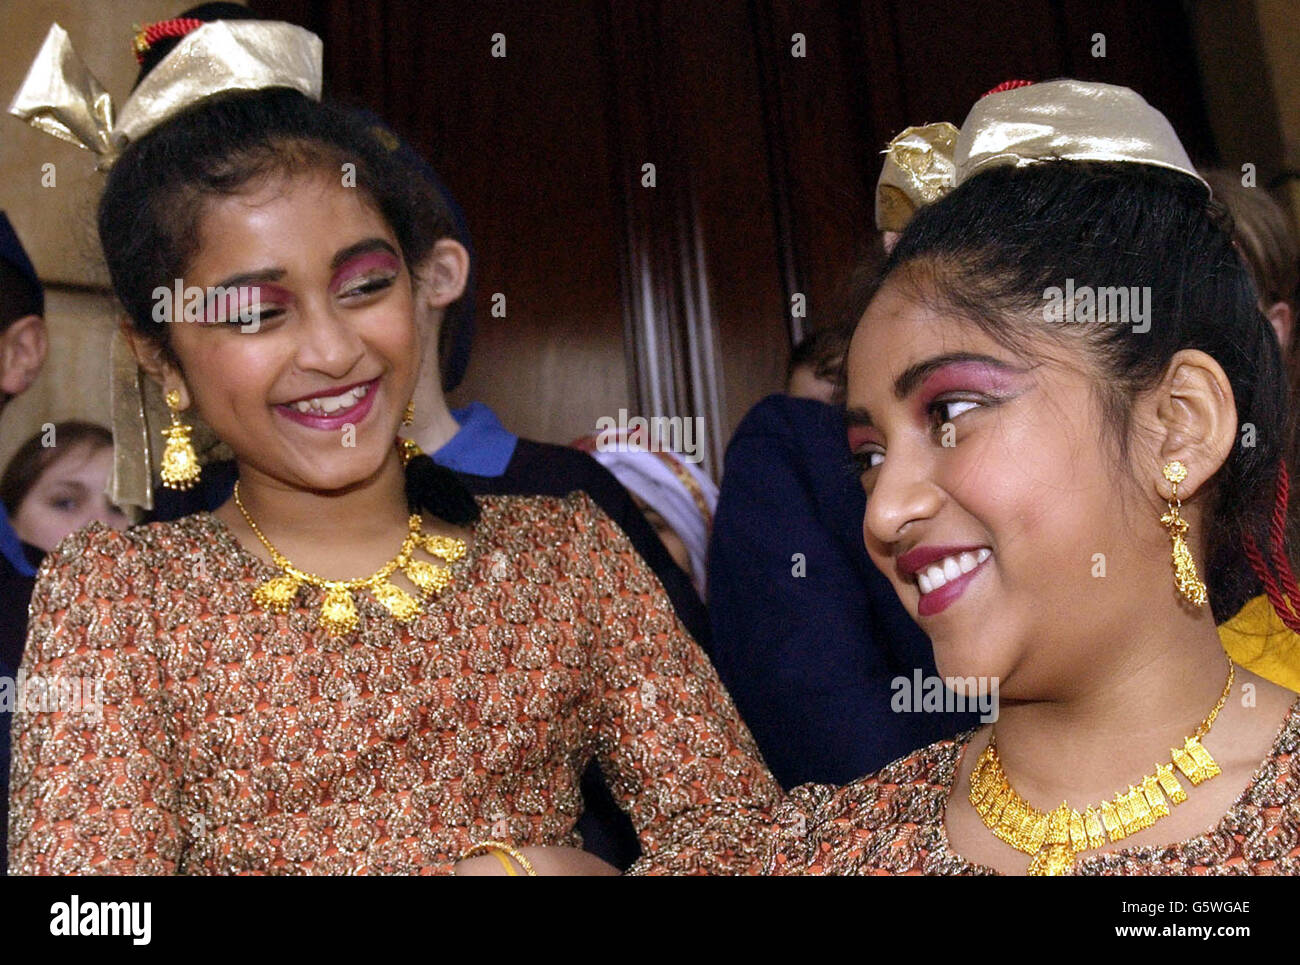 Chamari Abeysekara (L) and Anasha Abeynayake (R), both aged 11, from the Kamalangani Kalayathana school in Surrey, will be taking part in the parade celebrating the Queen's Golden Jubilee. Stock Photo